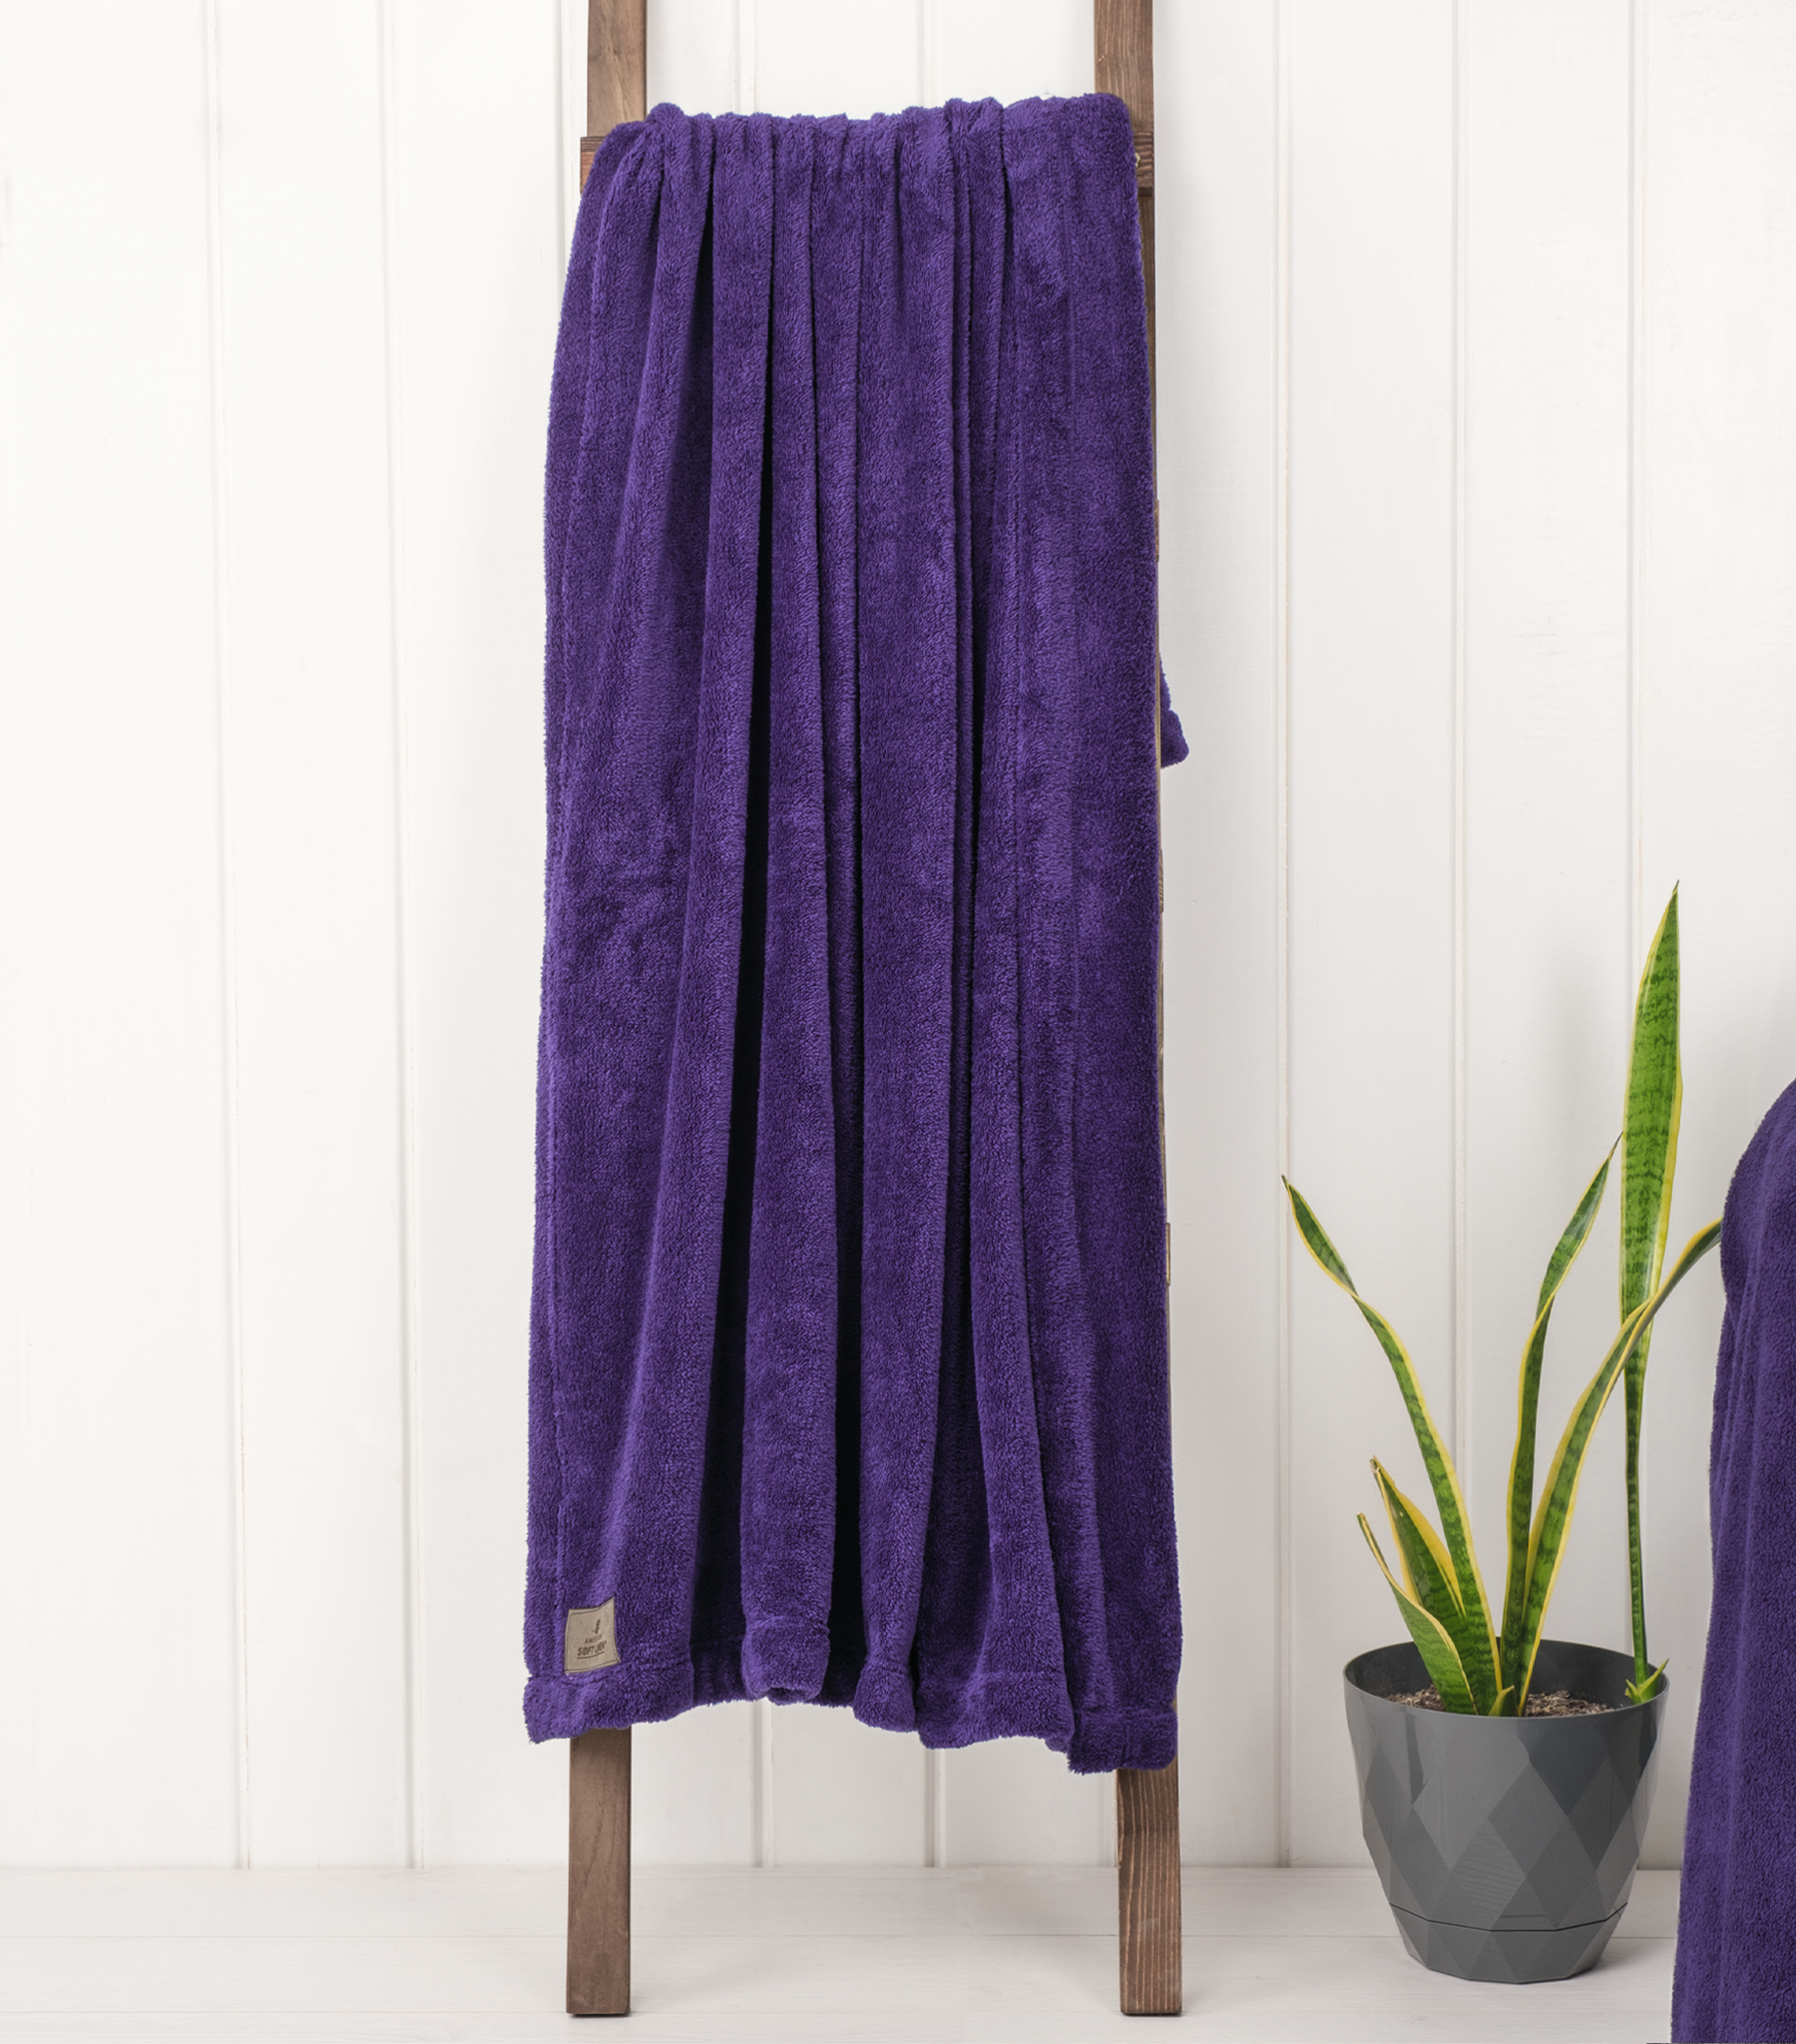 American Soft Linen - Bedding Fleece Blanket - Throw Size 50x60 inches - Purple - 2